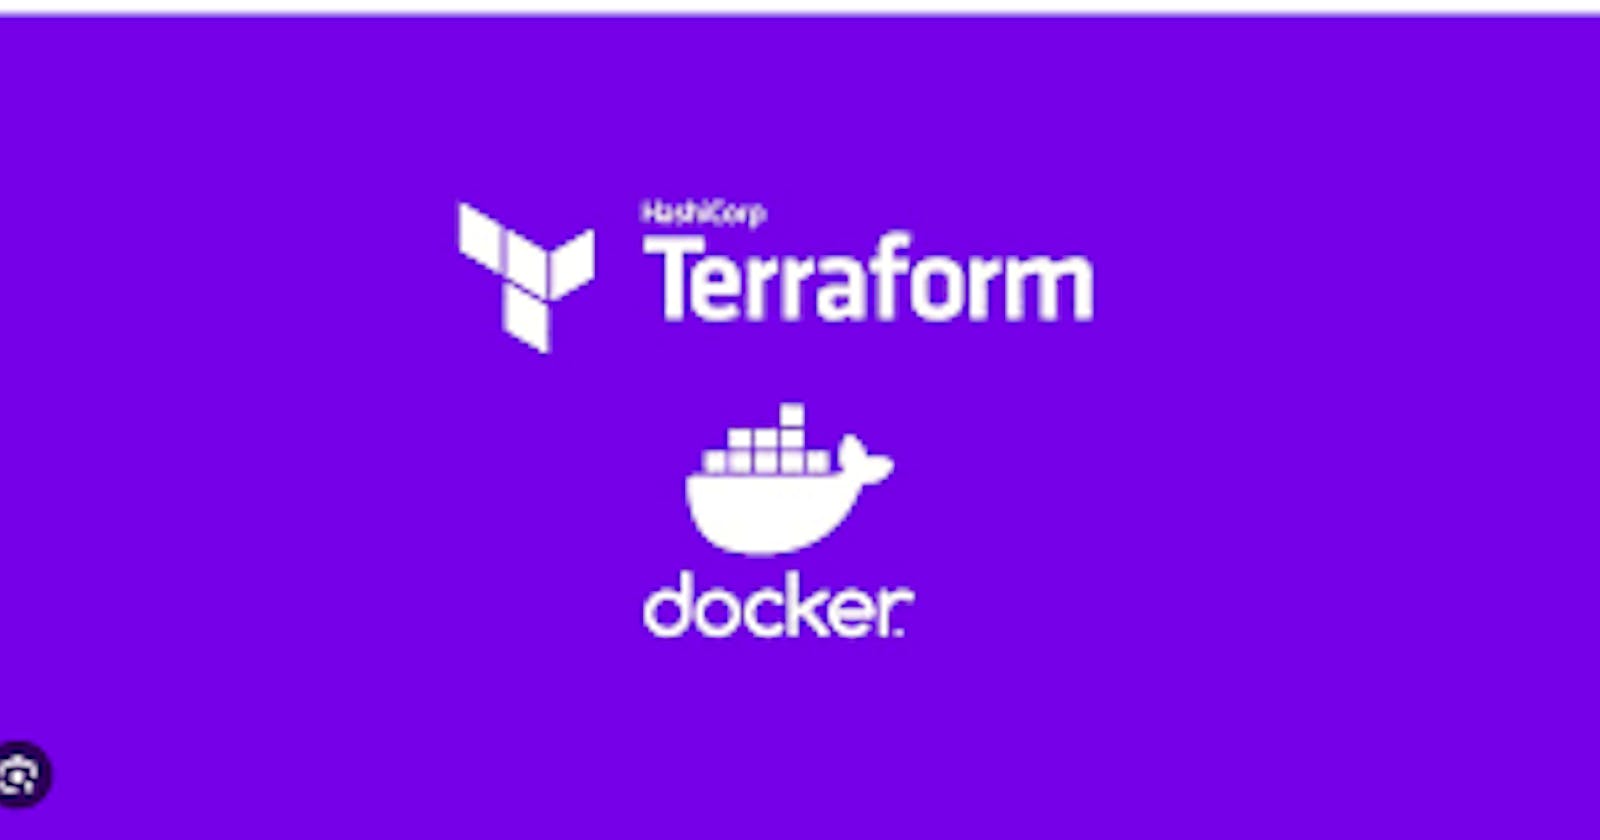 Day 62: Terraform and Docker